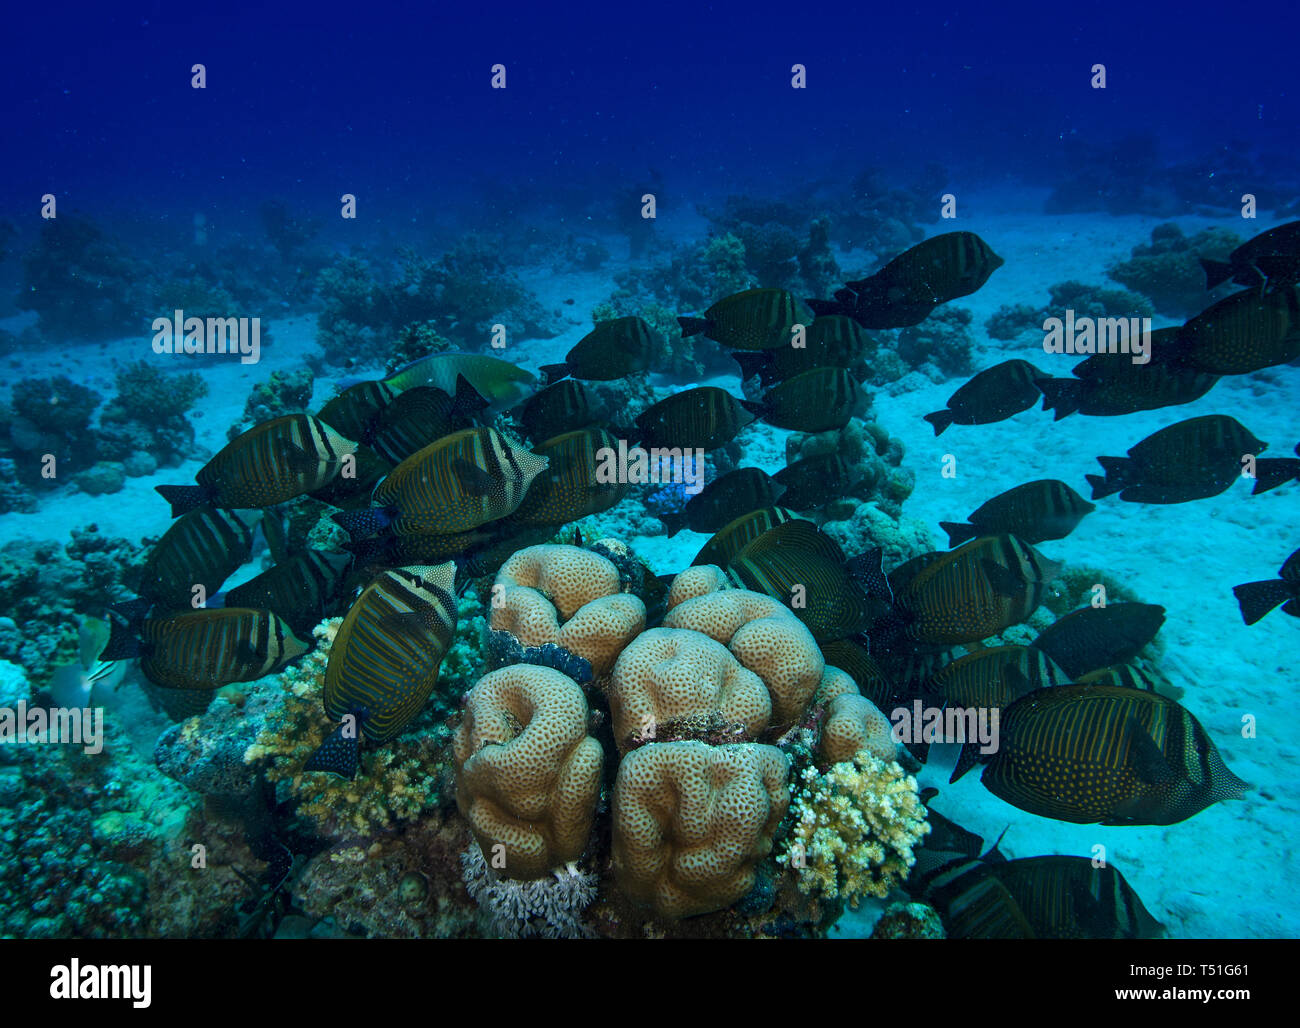 Shoal of Desjardin's sailfin tang, Zebrasoma desjardinii, feeding on coral reef, Hamata, Egypt Stock Photo